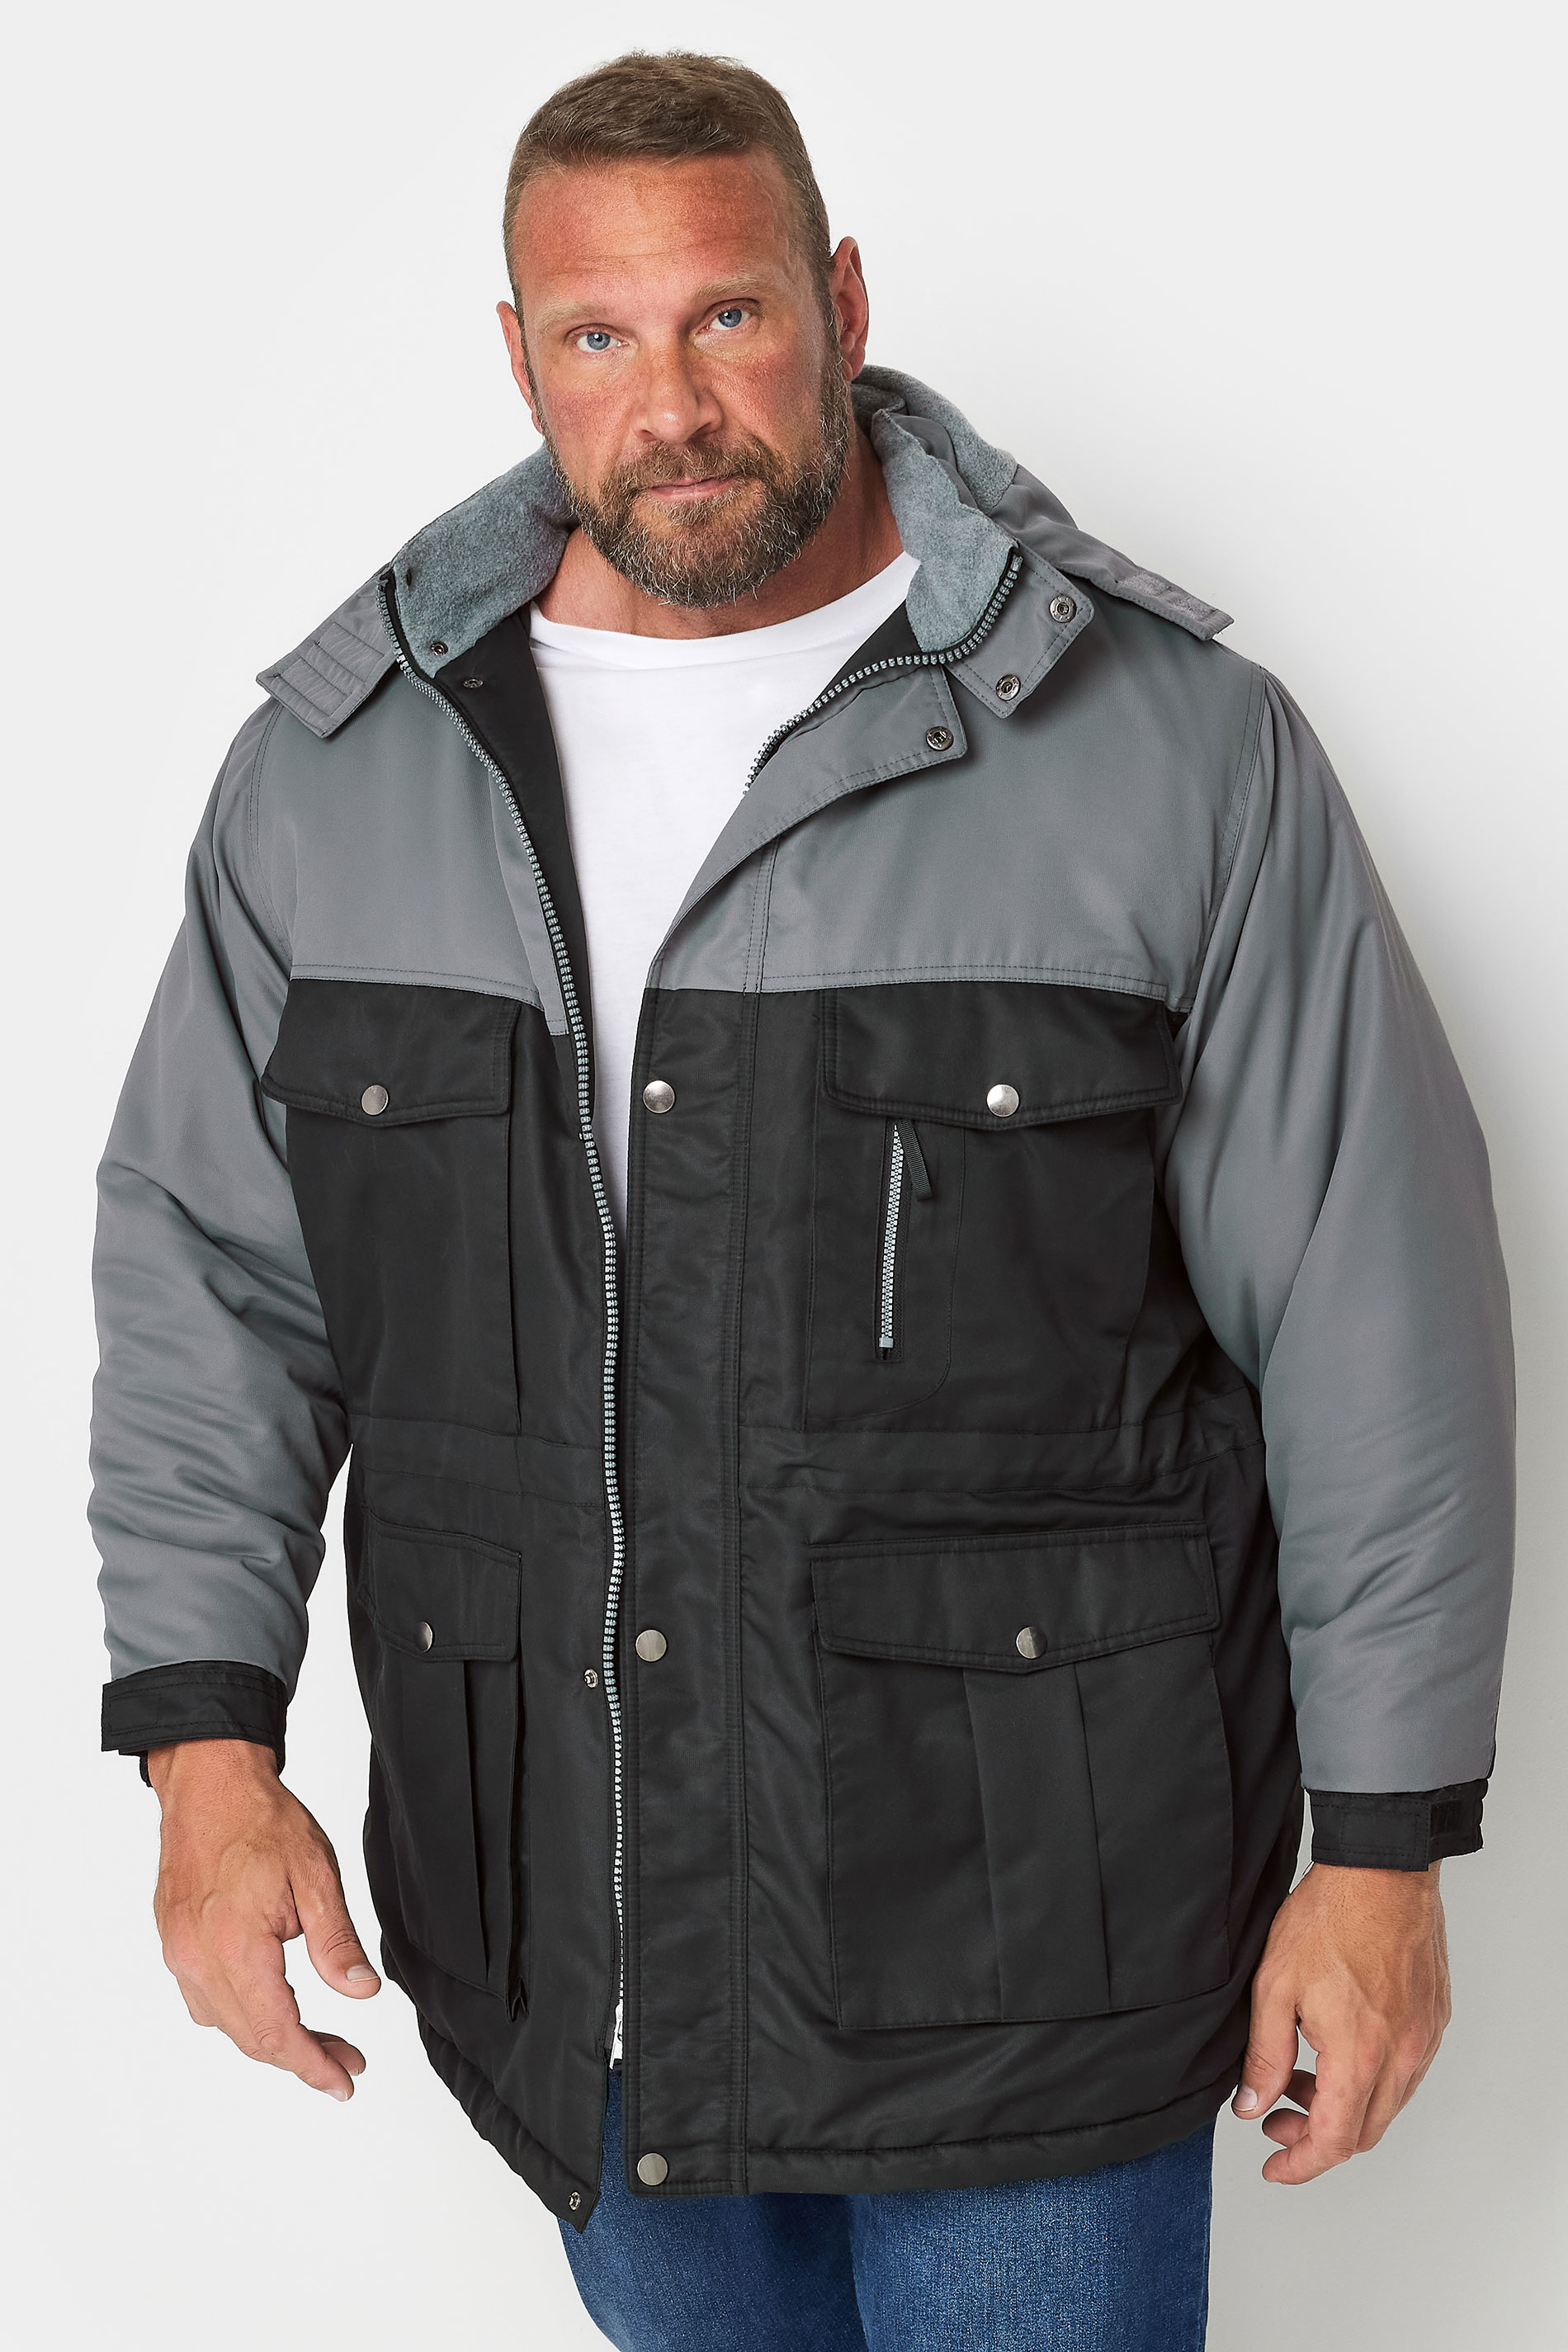 BadRhino Big & Tall Grey & Black Fleece Lined Hooded Coat | BadRhino 1